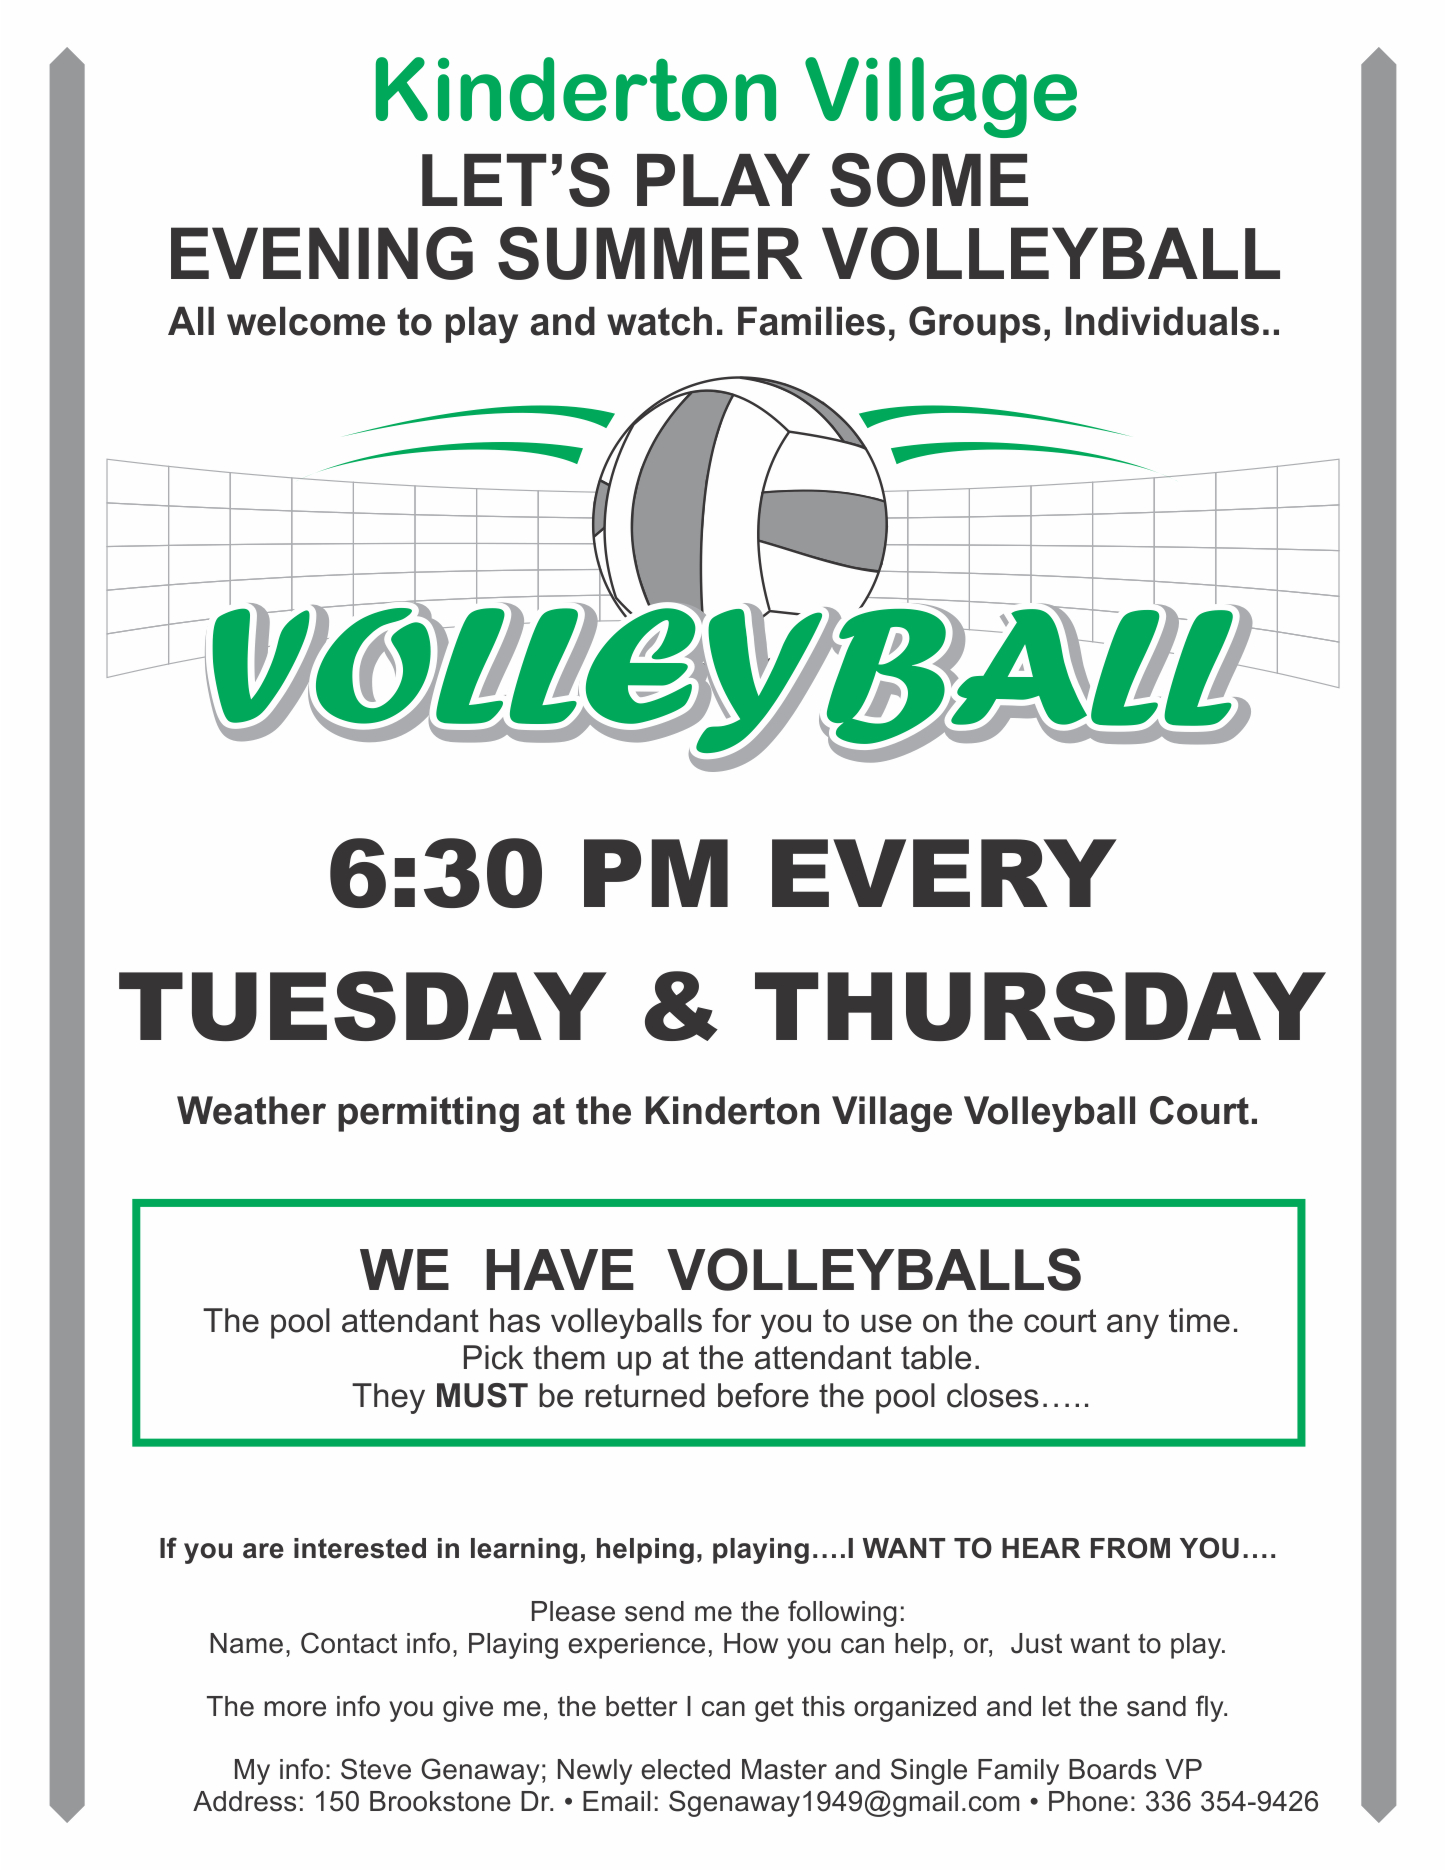 Kinderton Volleyball Tuesdays and Thursday